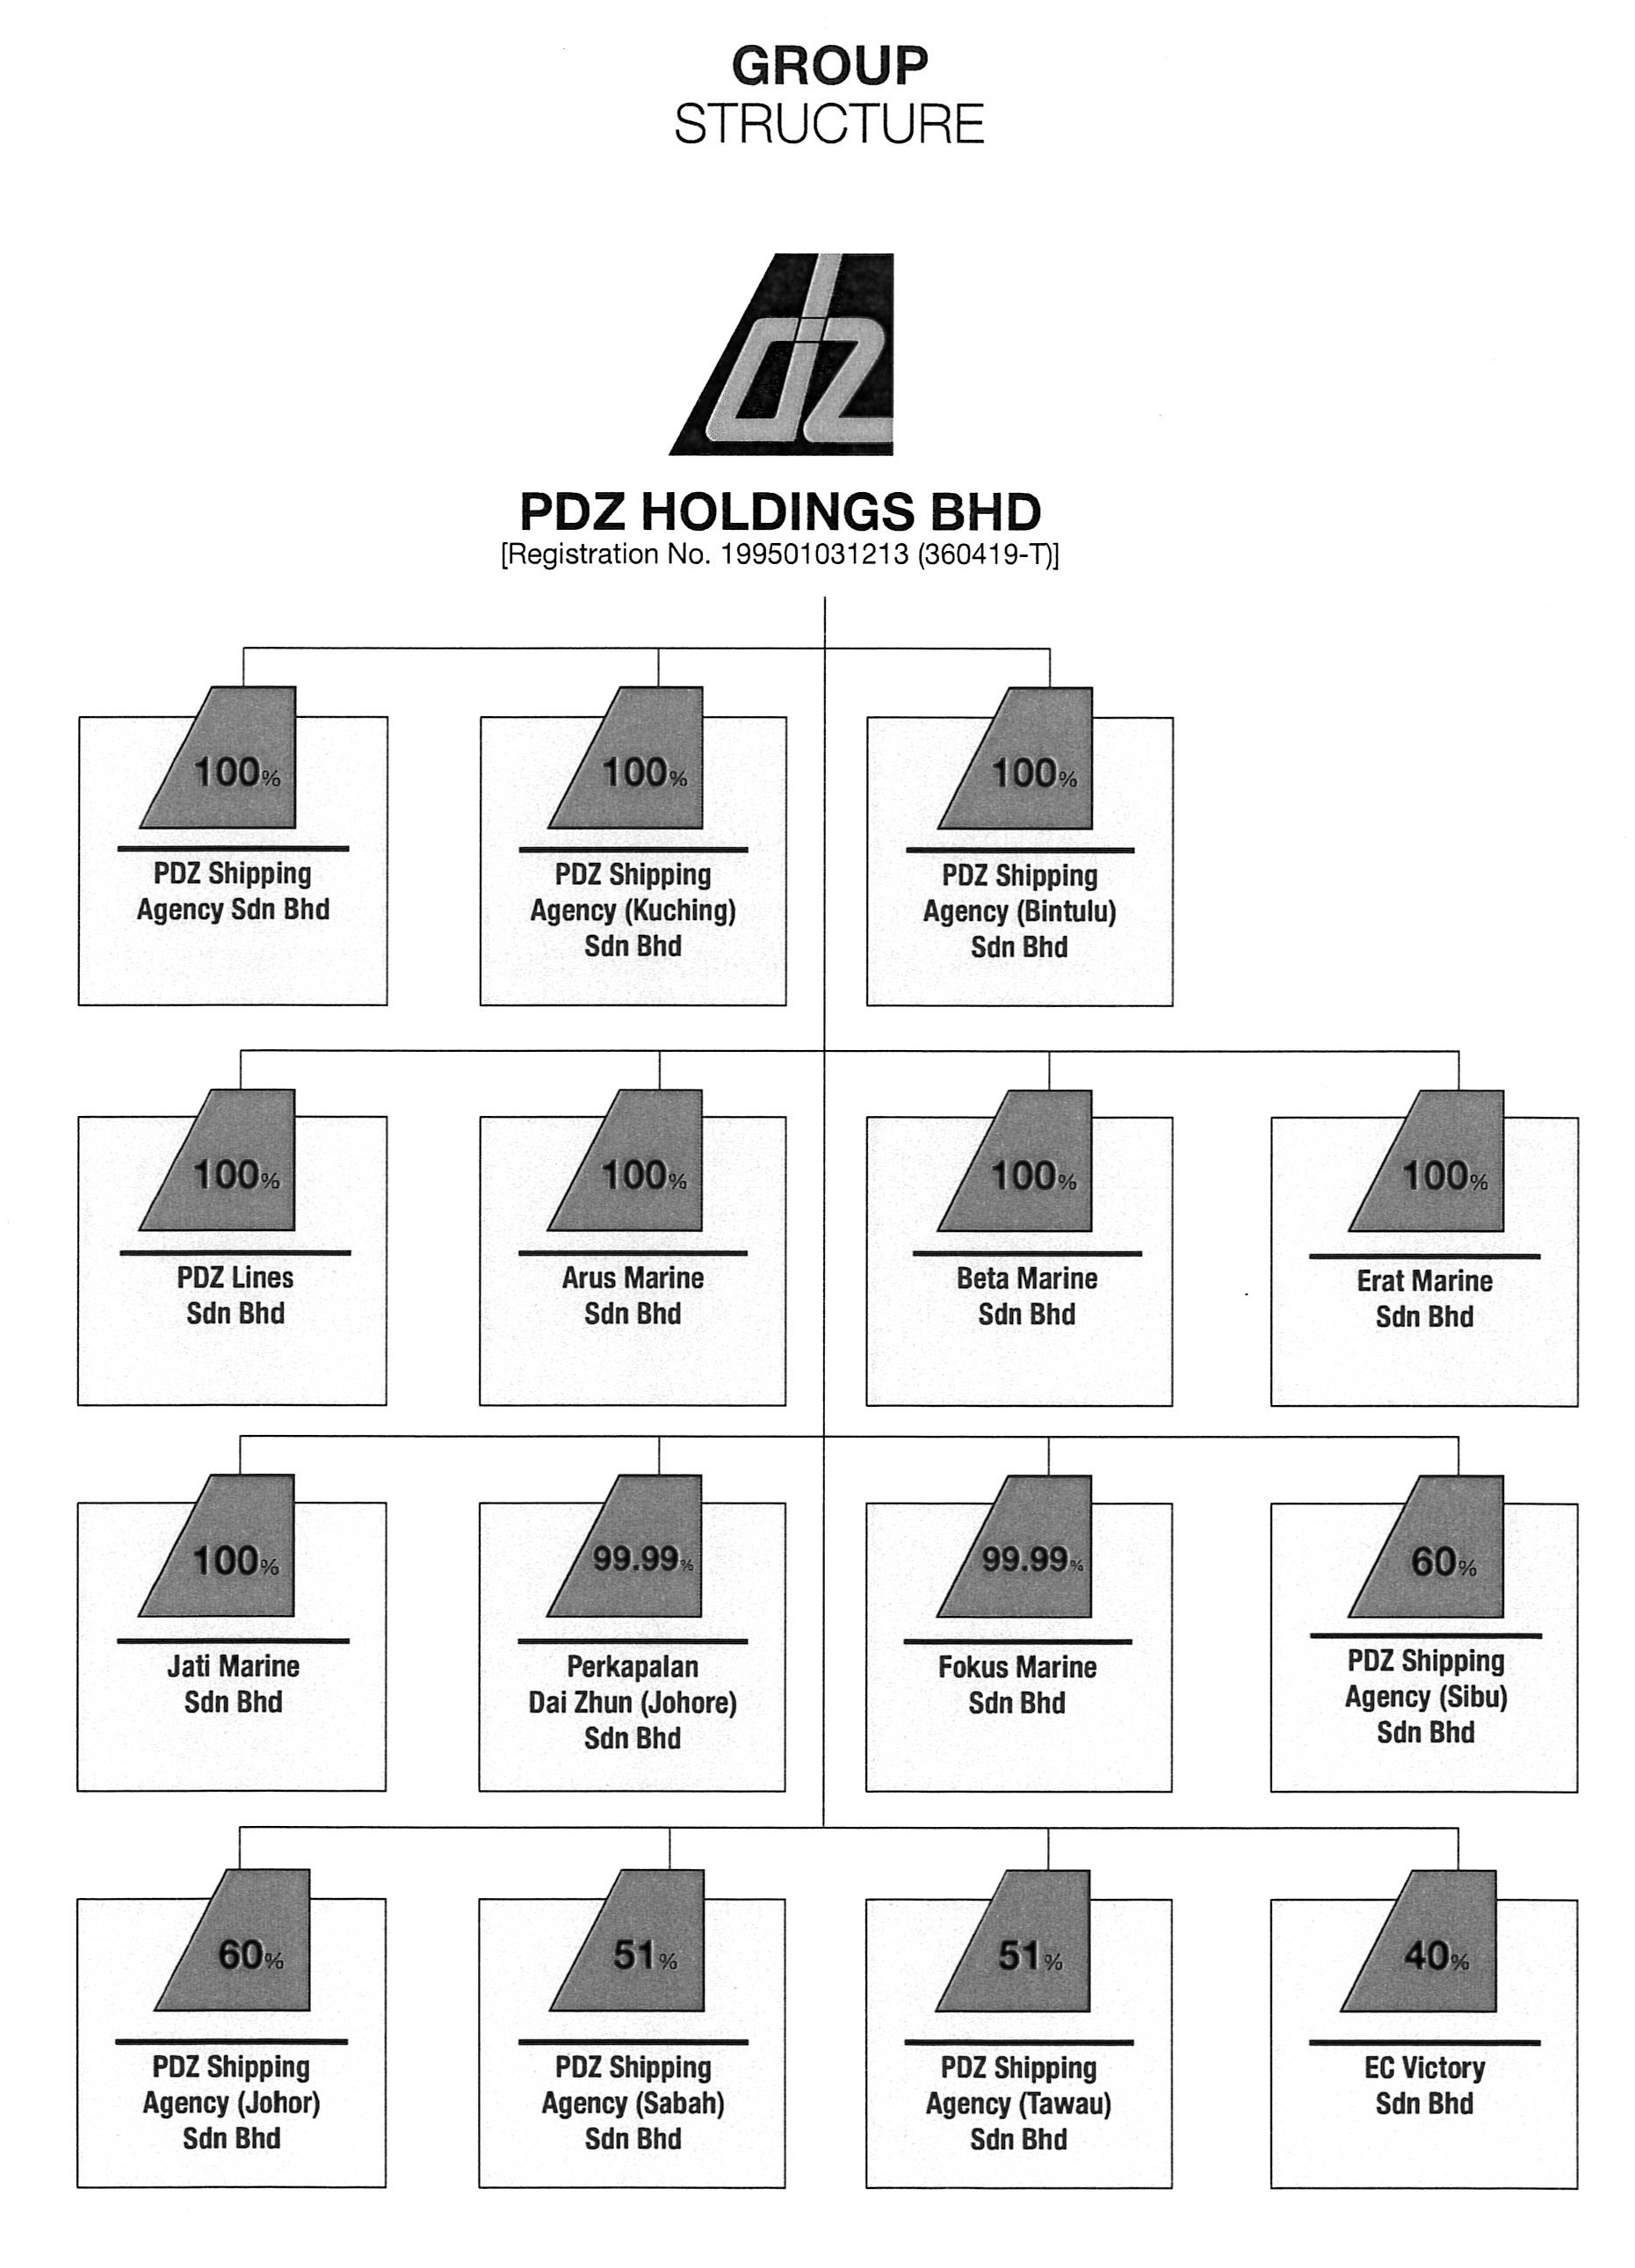 PDZ Corporate Structure